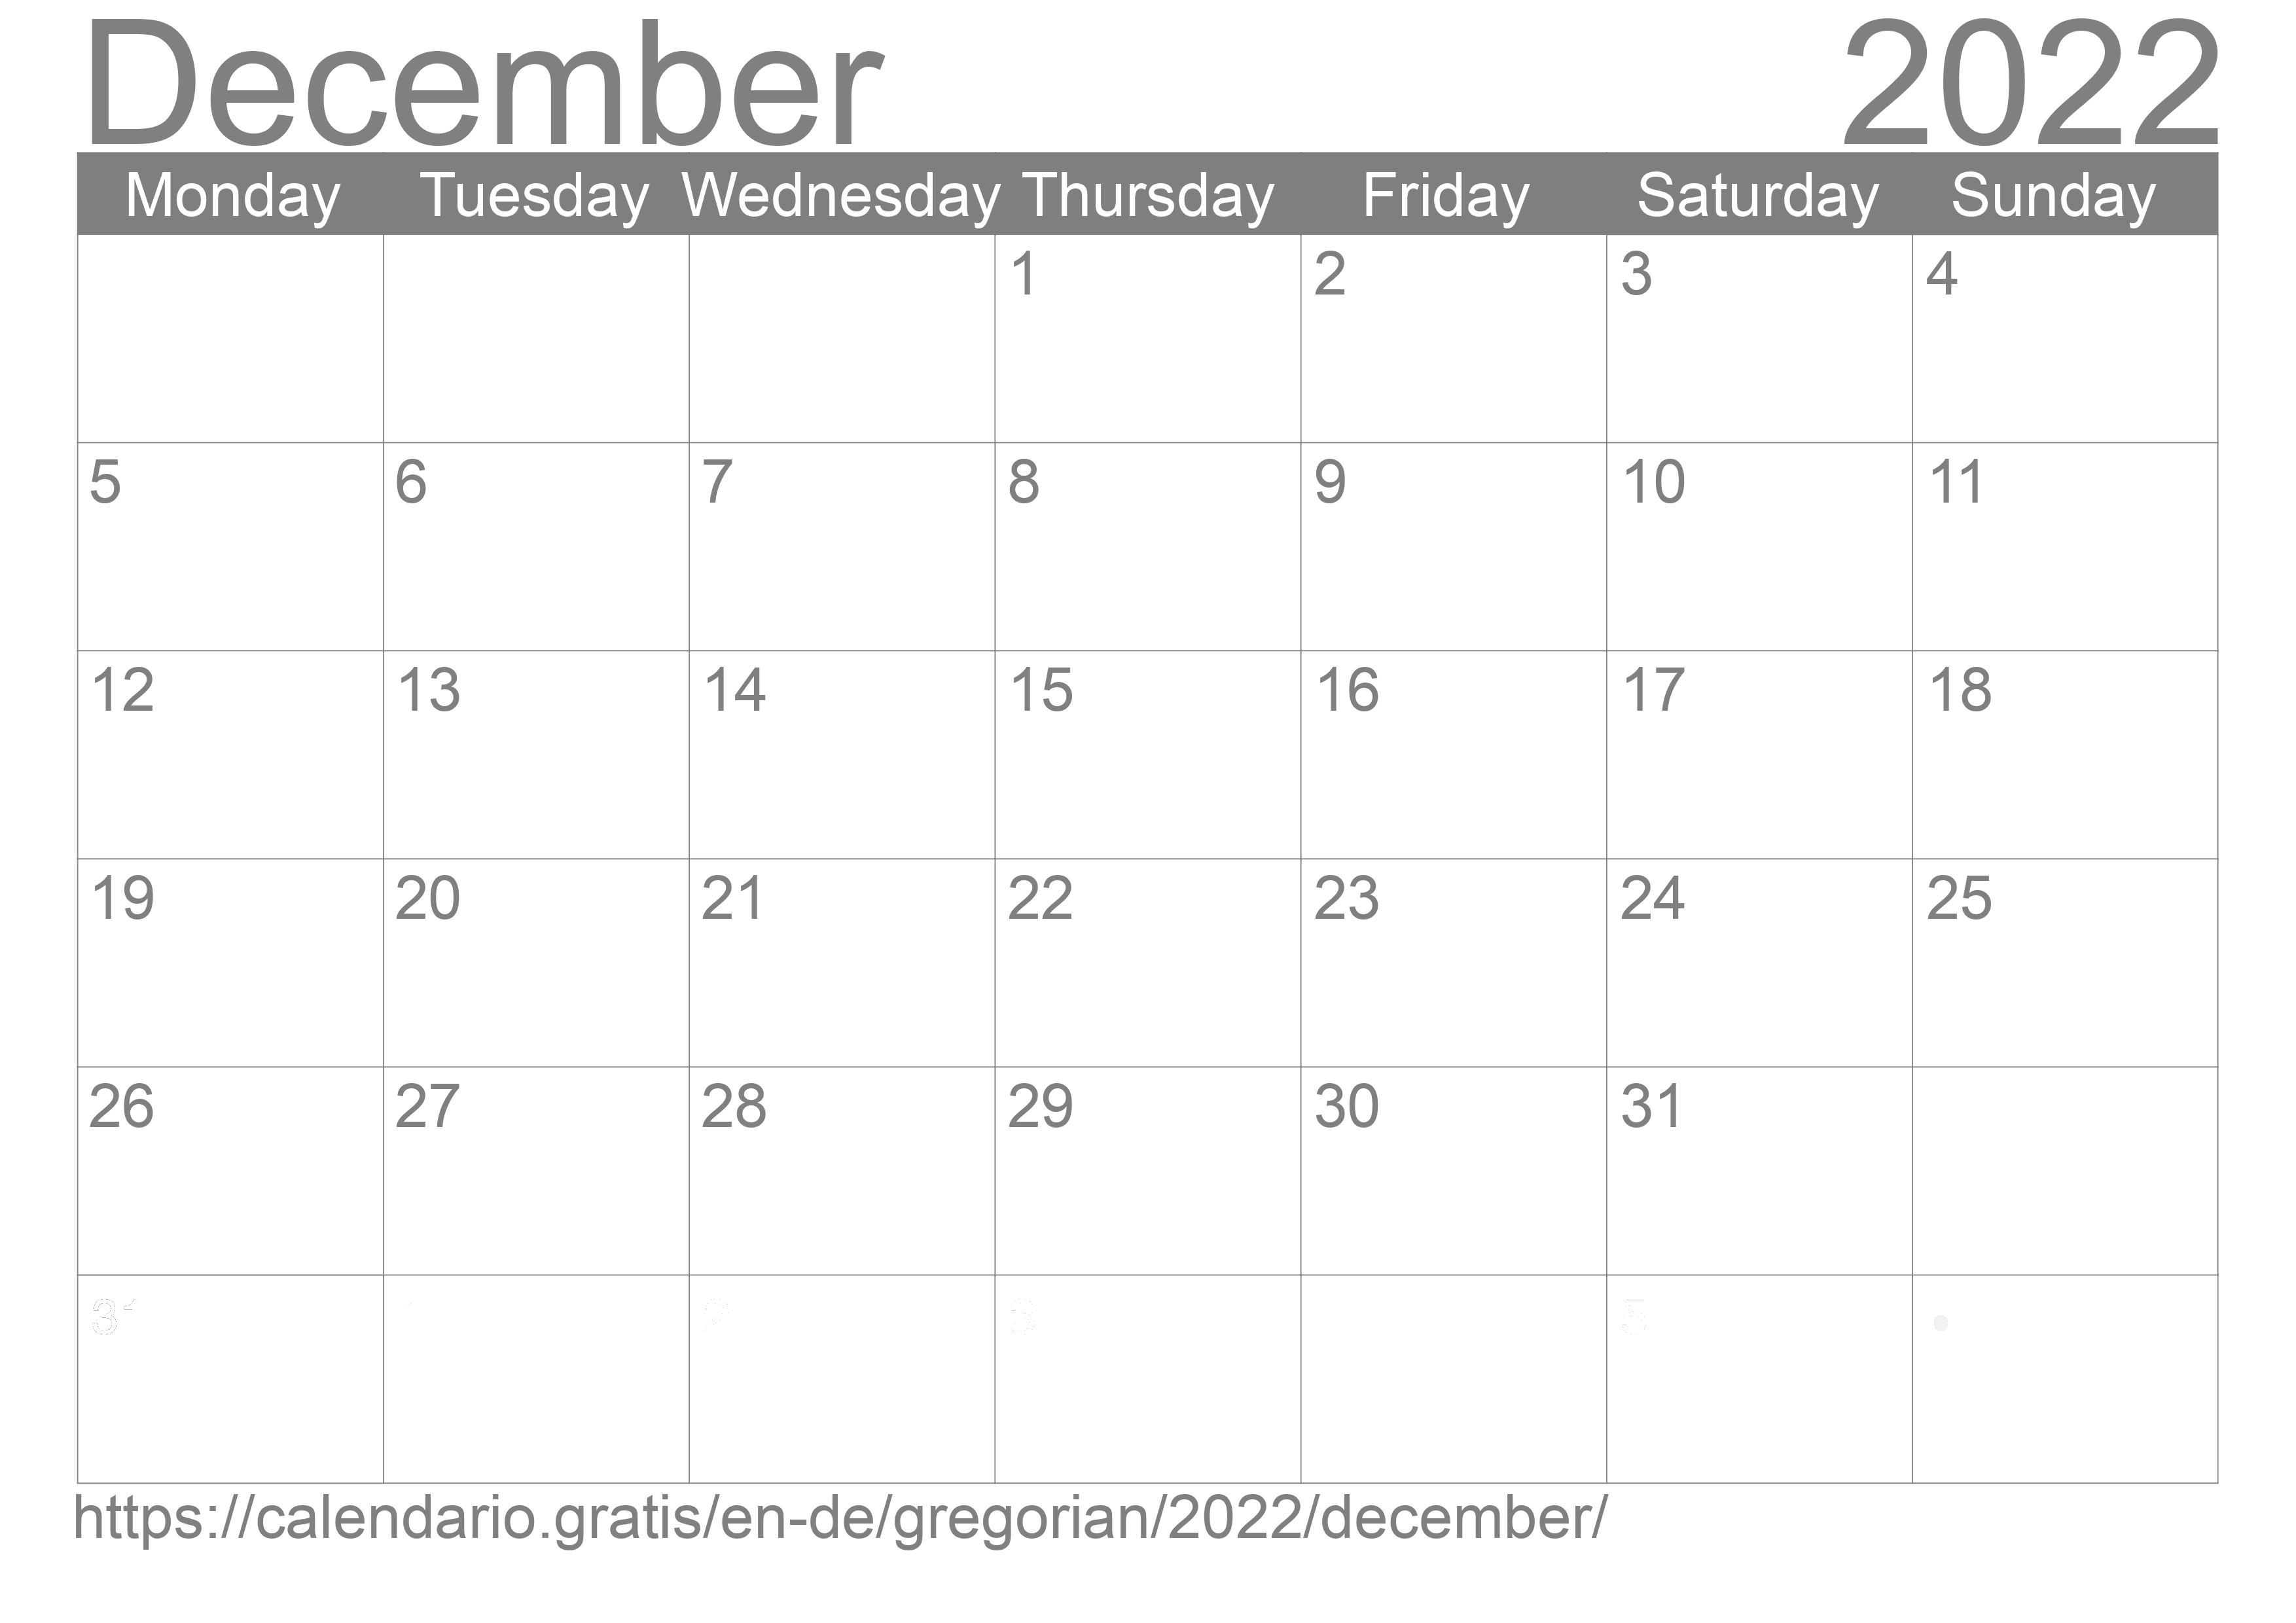 Calendar December 2022 to print